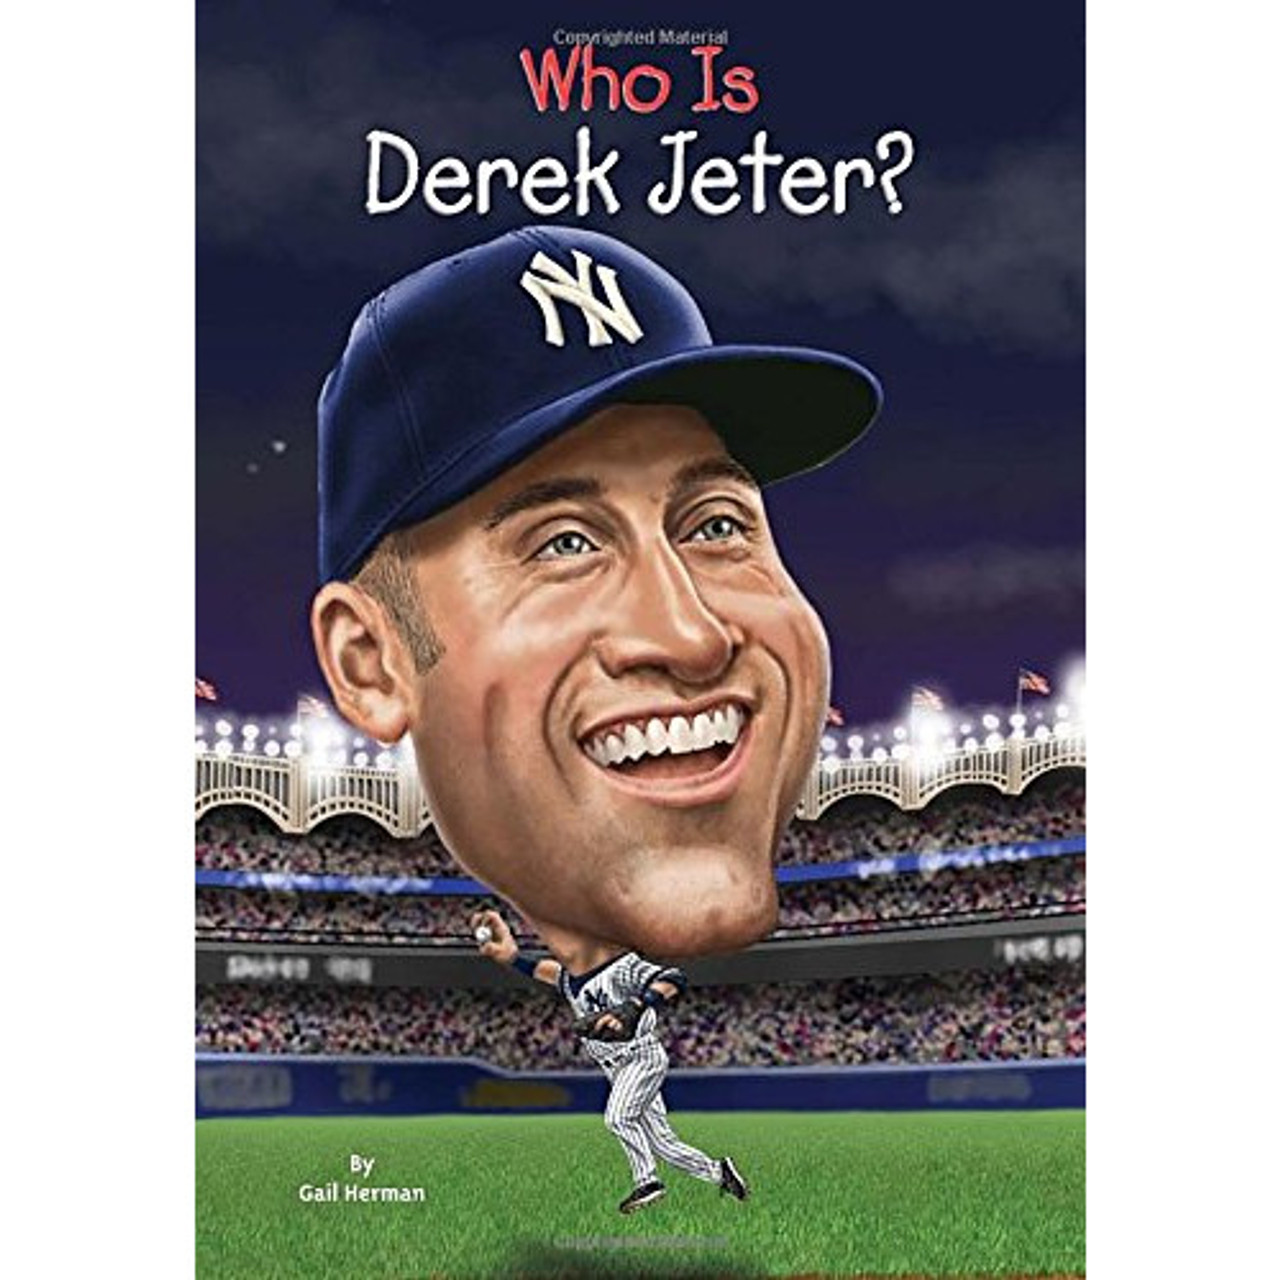 American League All-Stars Derek Jeter, of the New York Yankees, (L